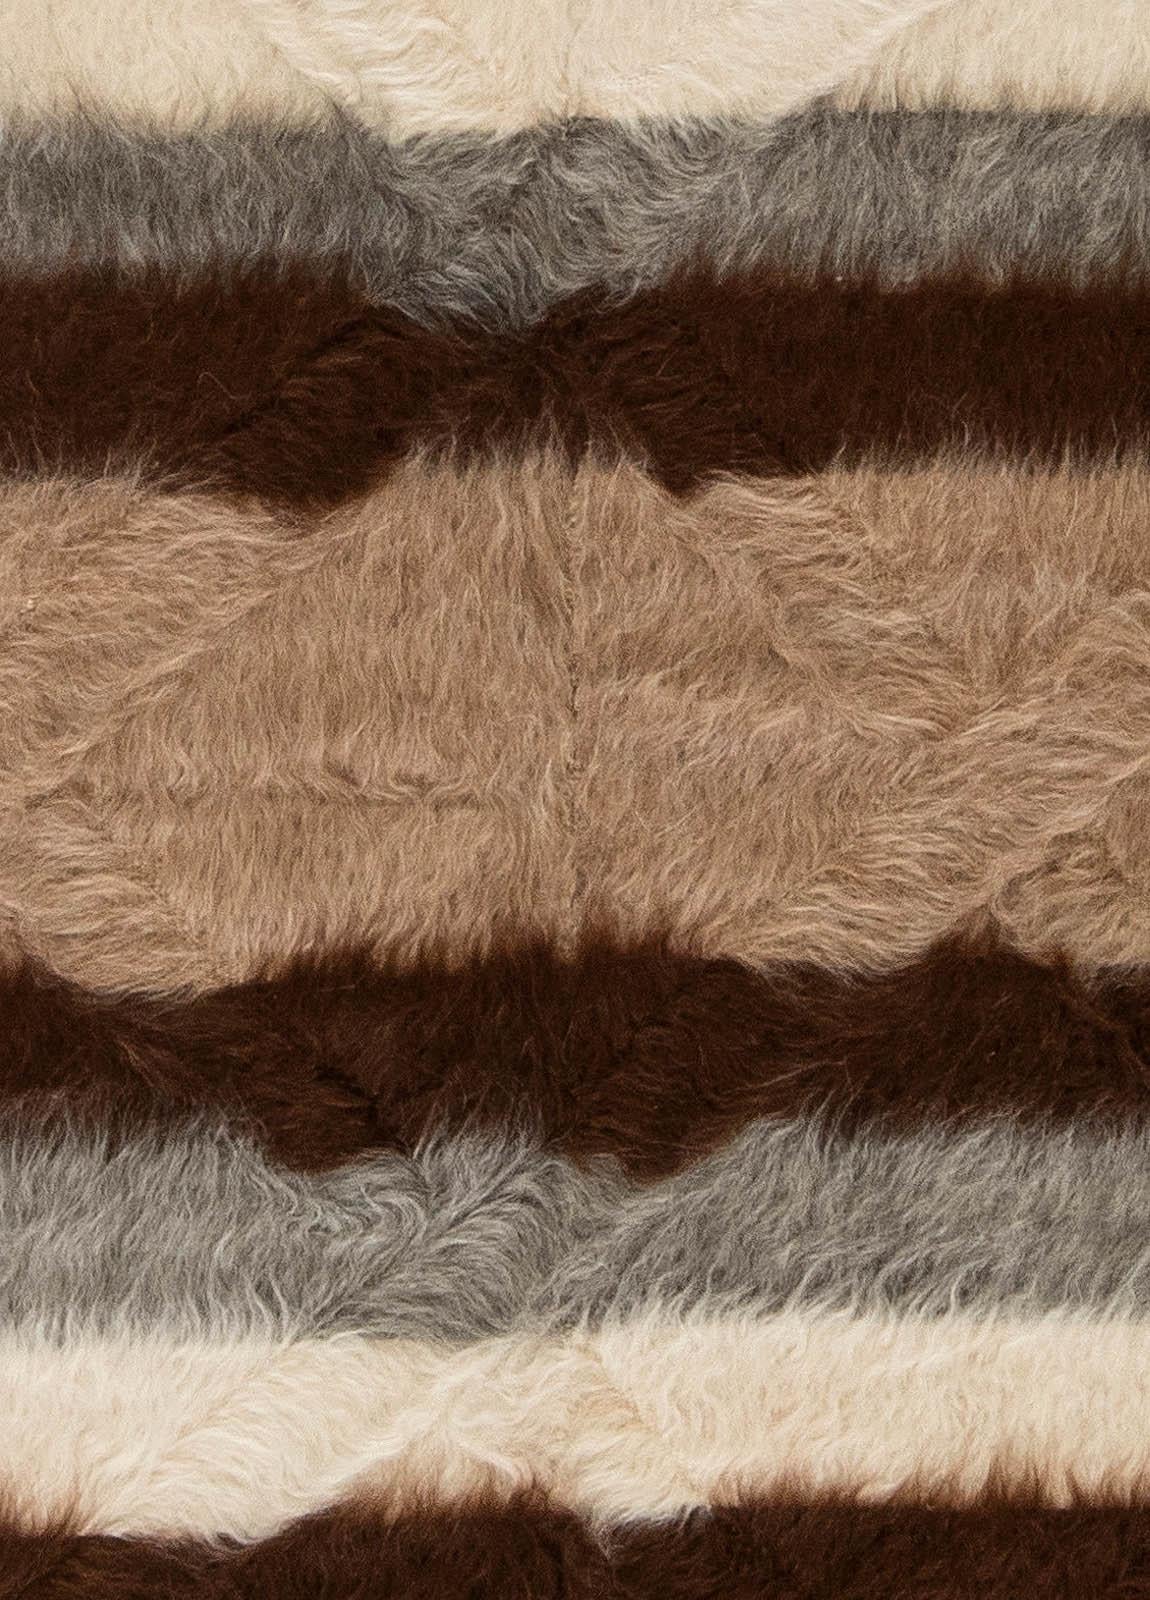 Taurus collection modern striped handmade goat hair rug by Doris Leslie Blau
Size: 5'4